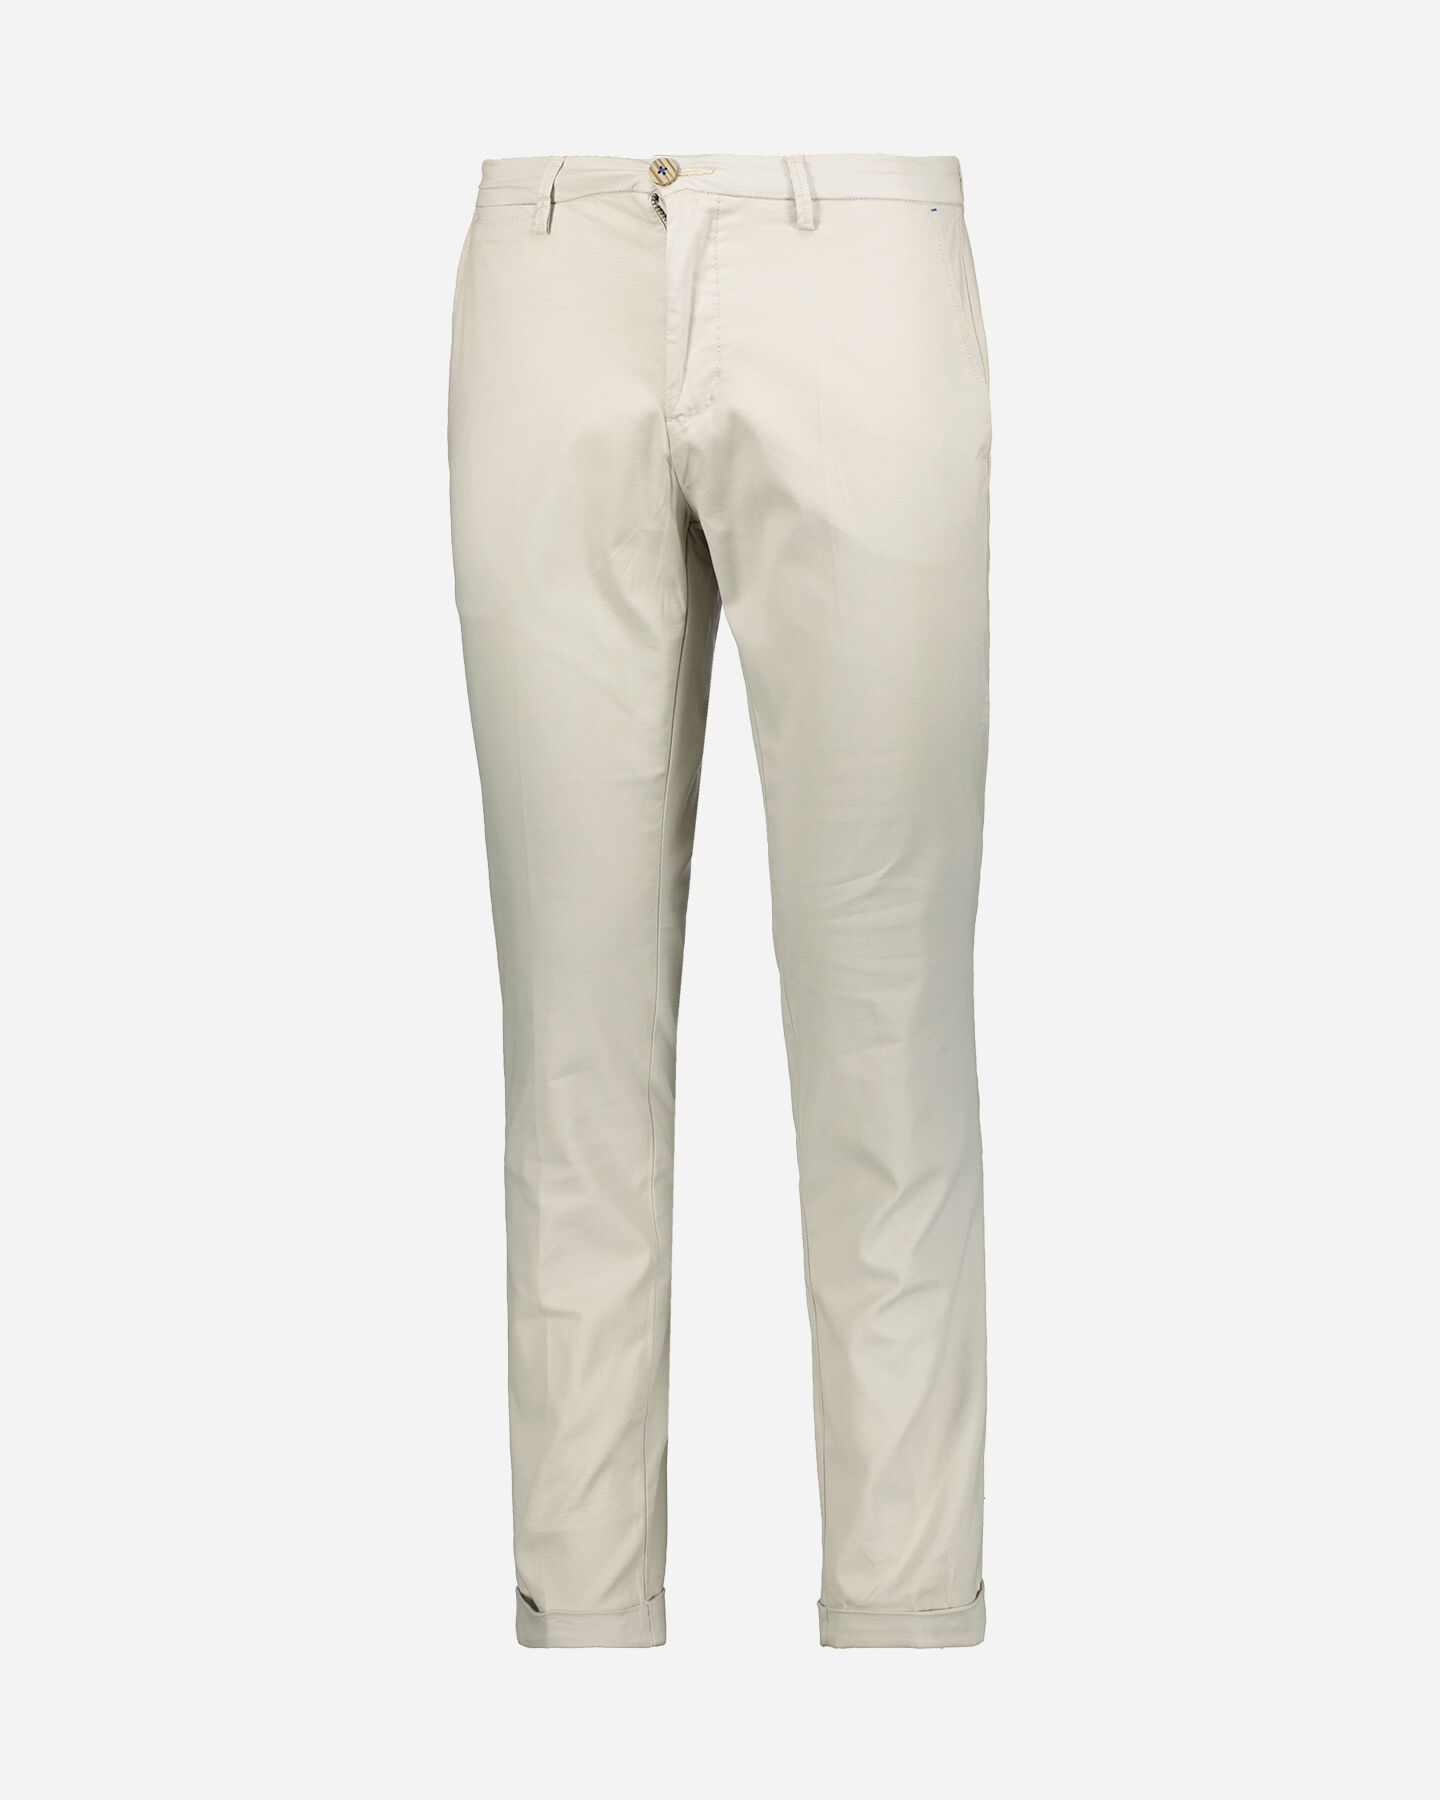  Pantalone BEST COMPANY SAN BABILA M S4122337|006|46 scatto 4